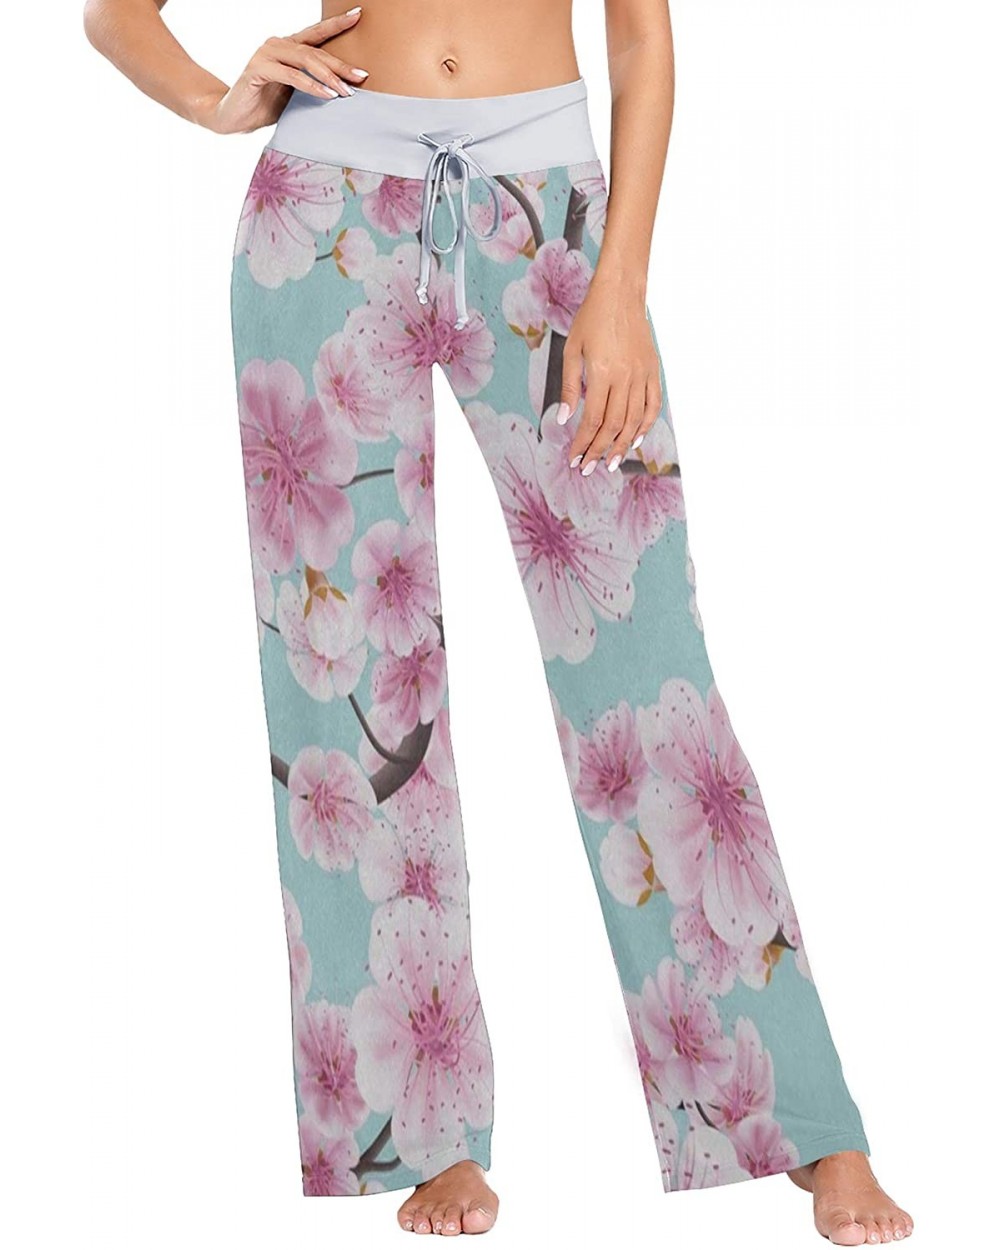 Women's Fashion Yoga Pants Palazzo Casual Print Wide Leg Lounge Pants Comfy Casual Drawstring Long Pajama Pants - Watercolor ...